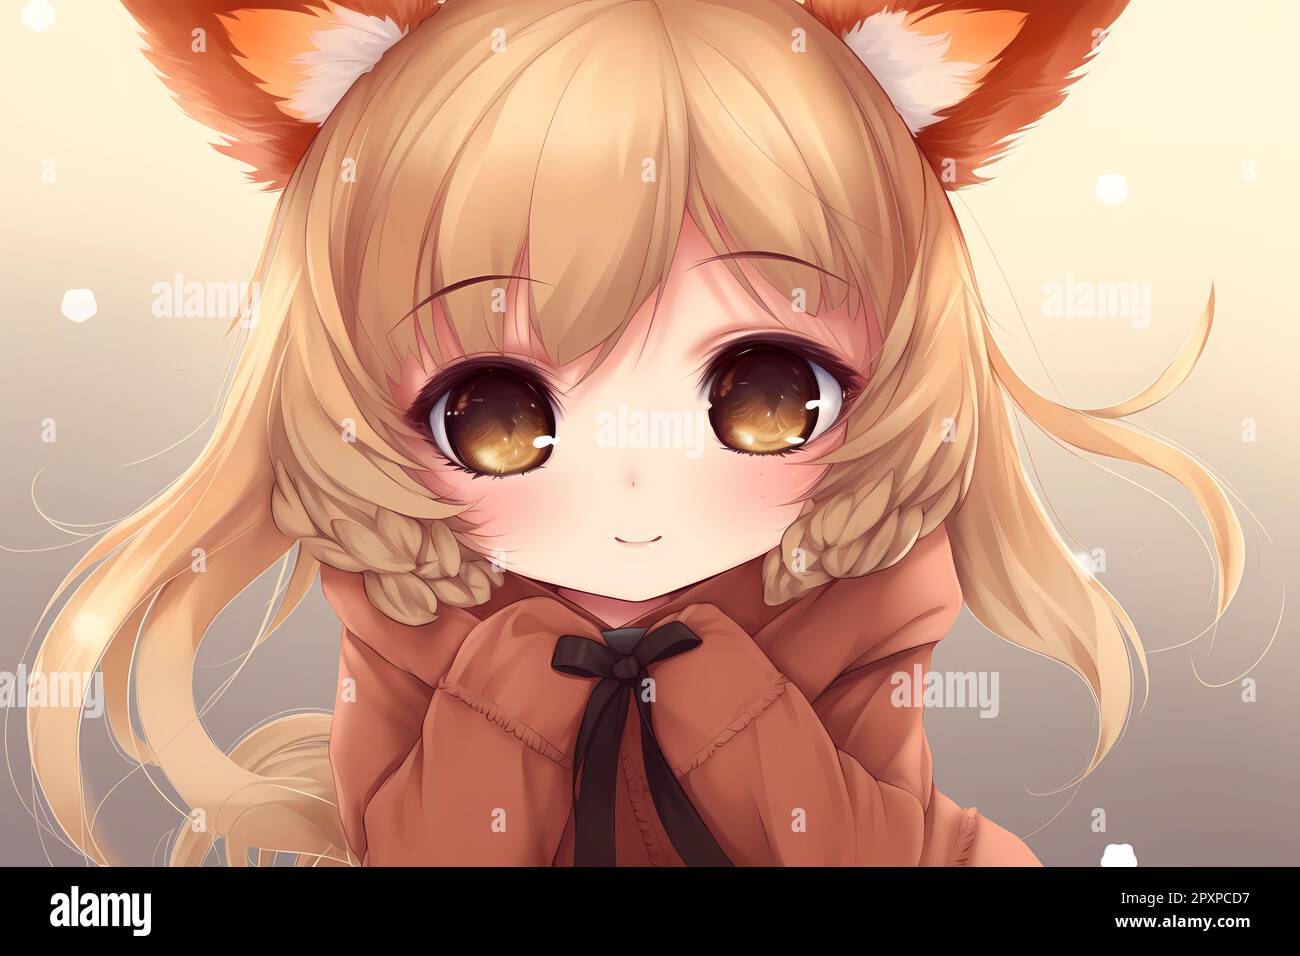 Details more than 77 fox ears anime